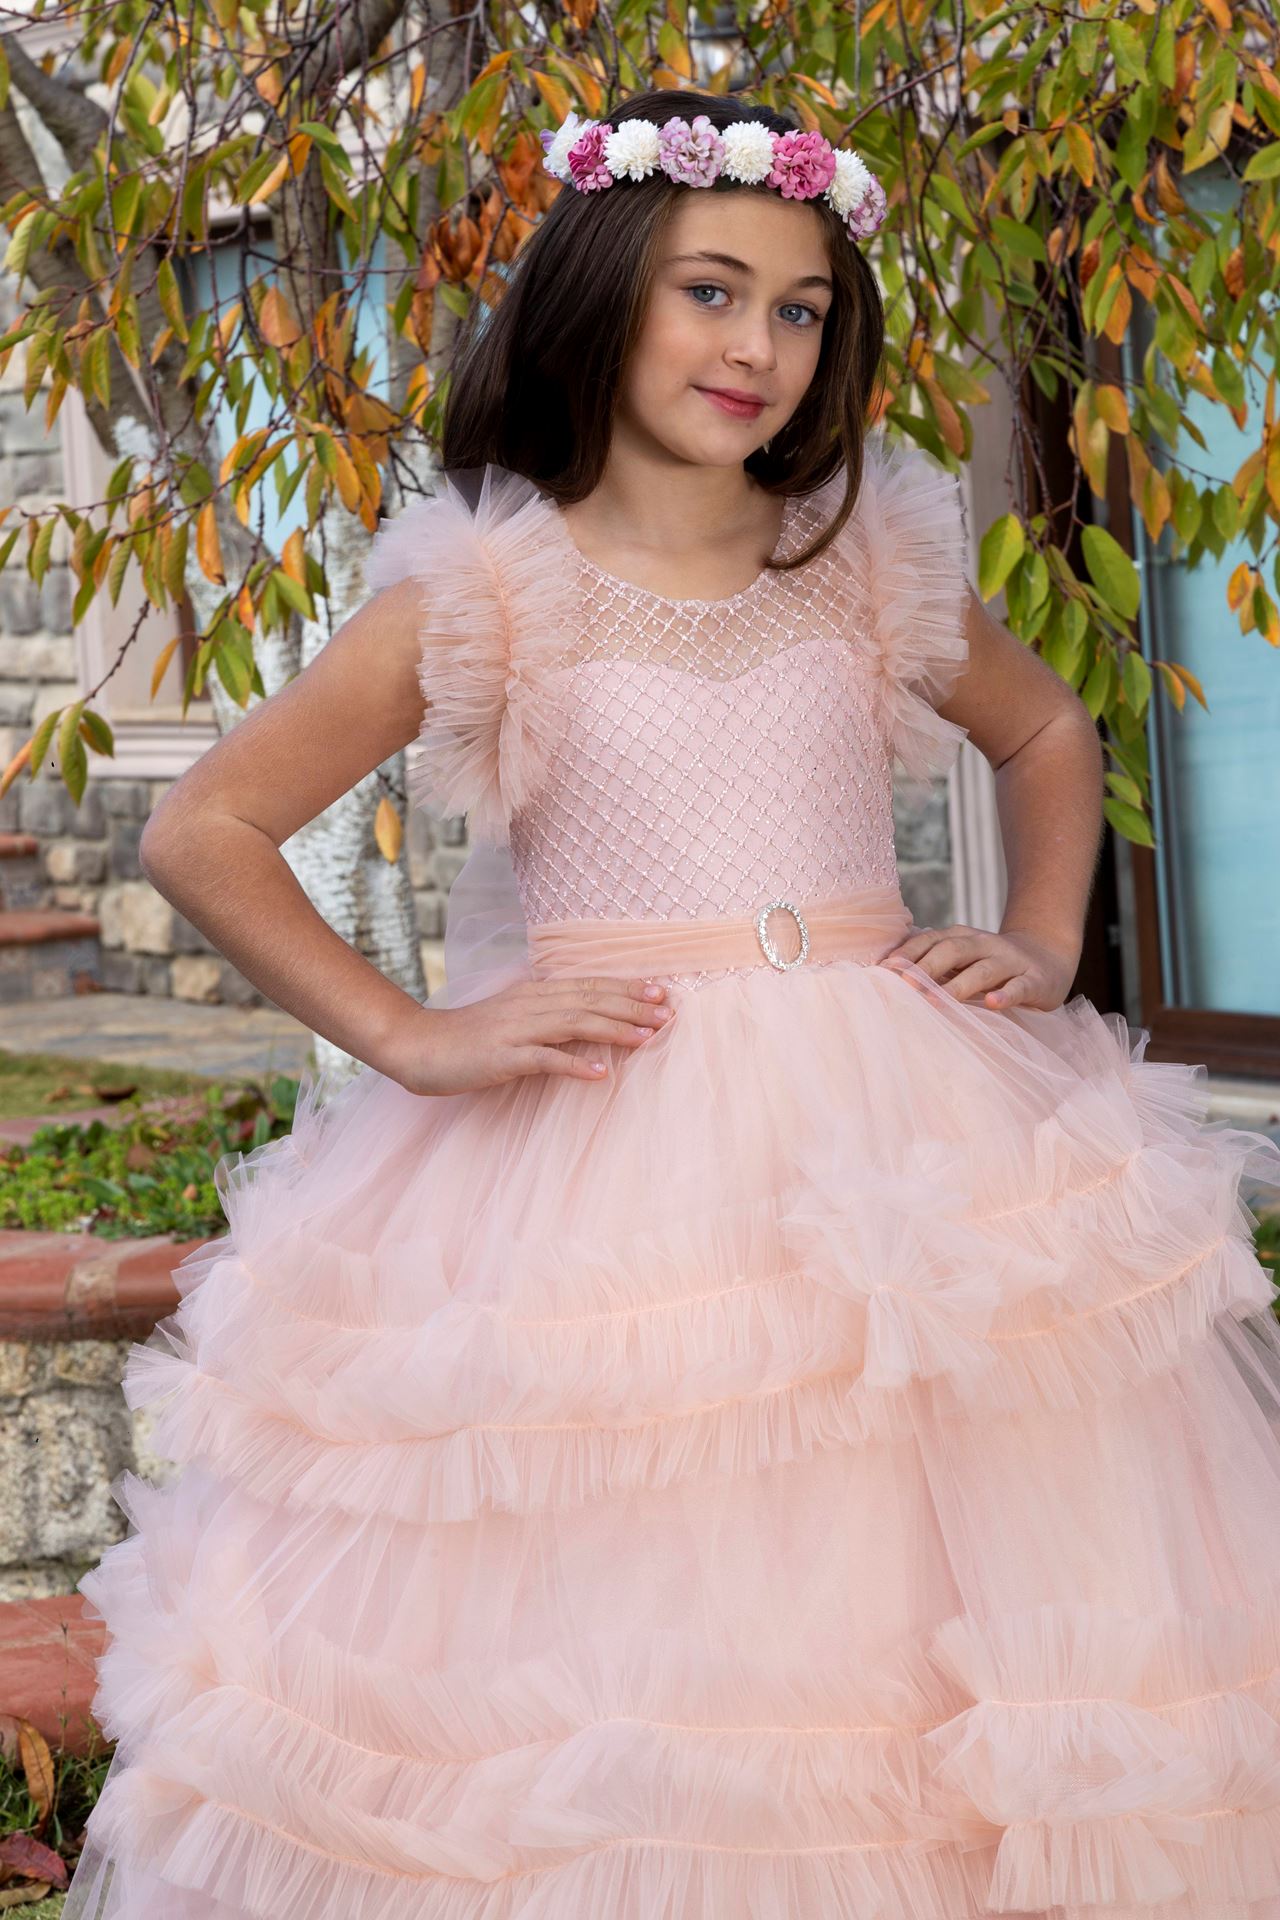 Yankee 7-11 Years Old Girl Dress 30076 Powder